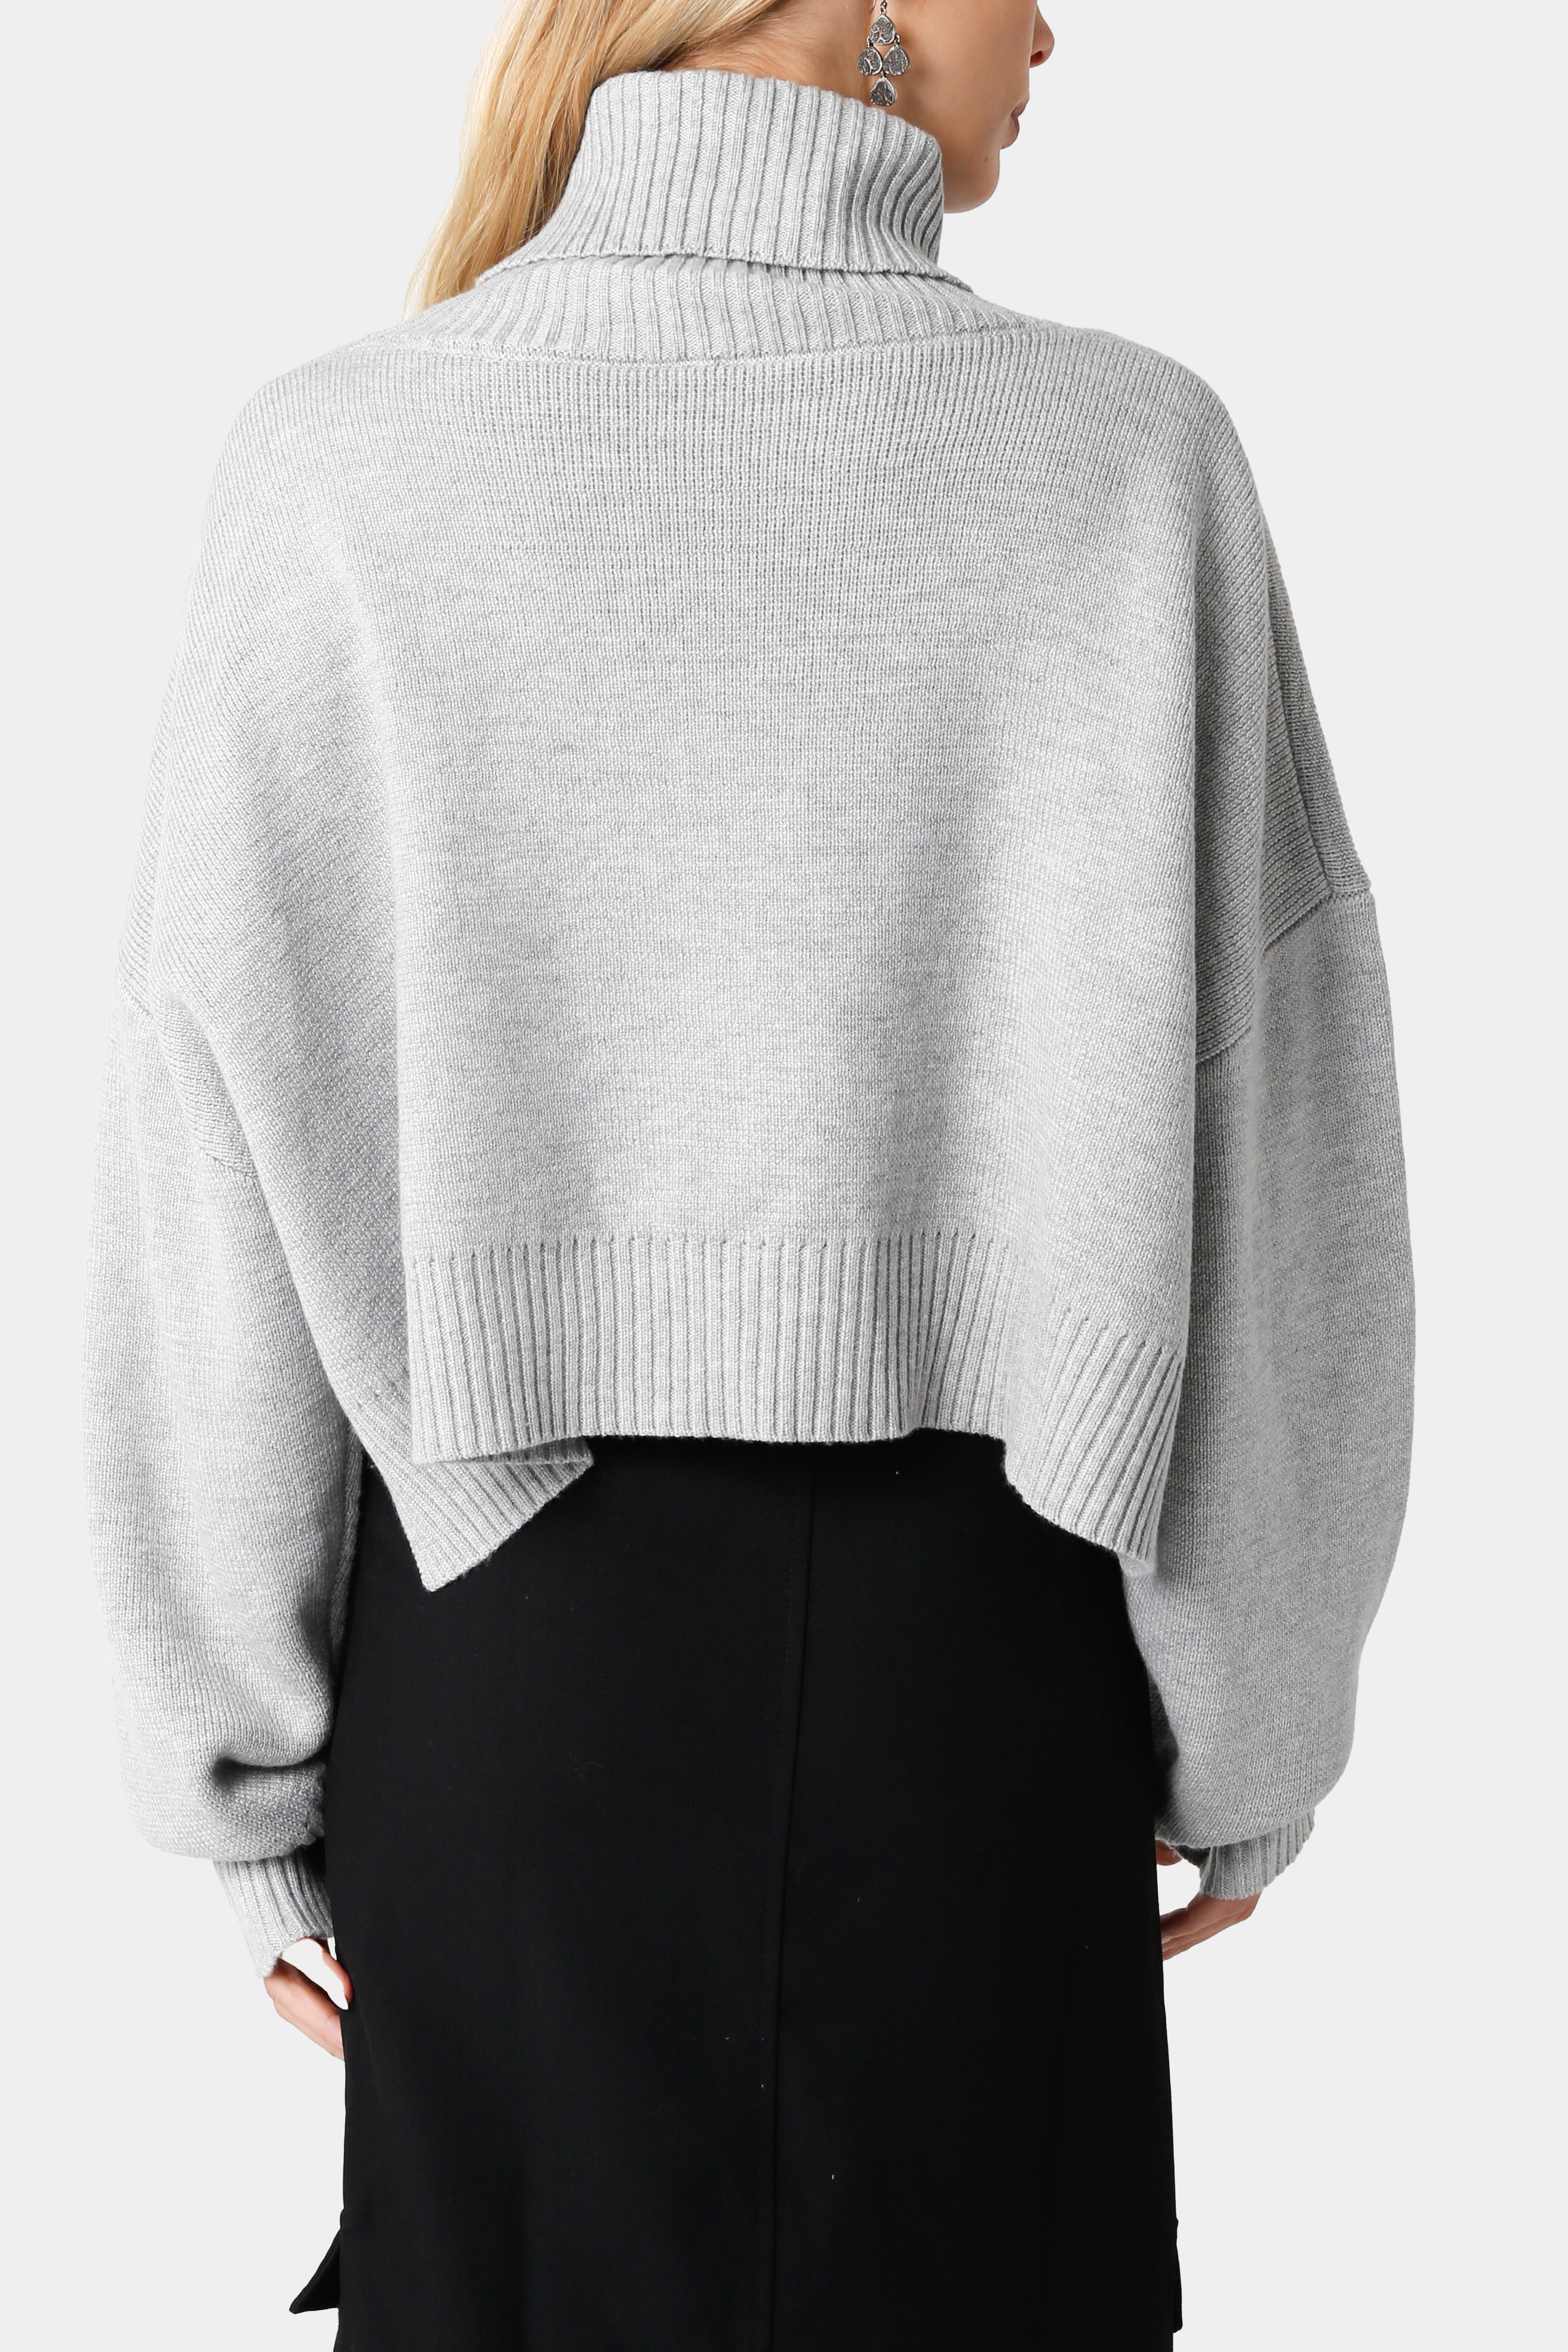 Tinsley Sweater